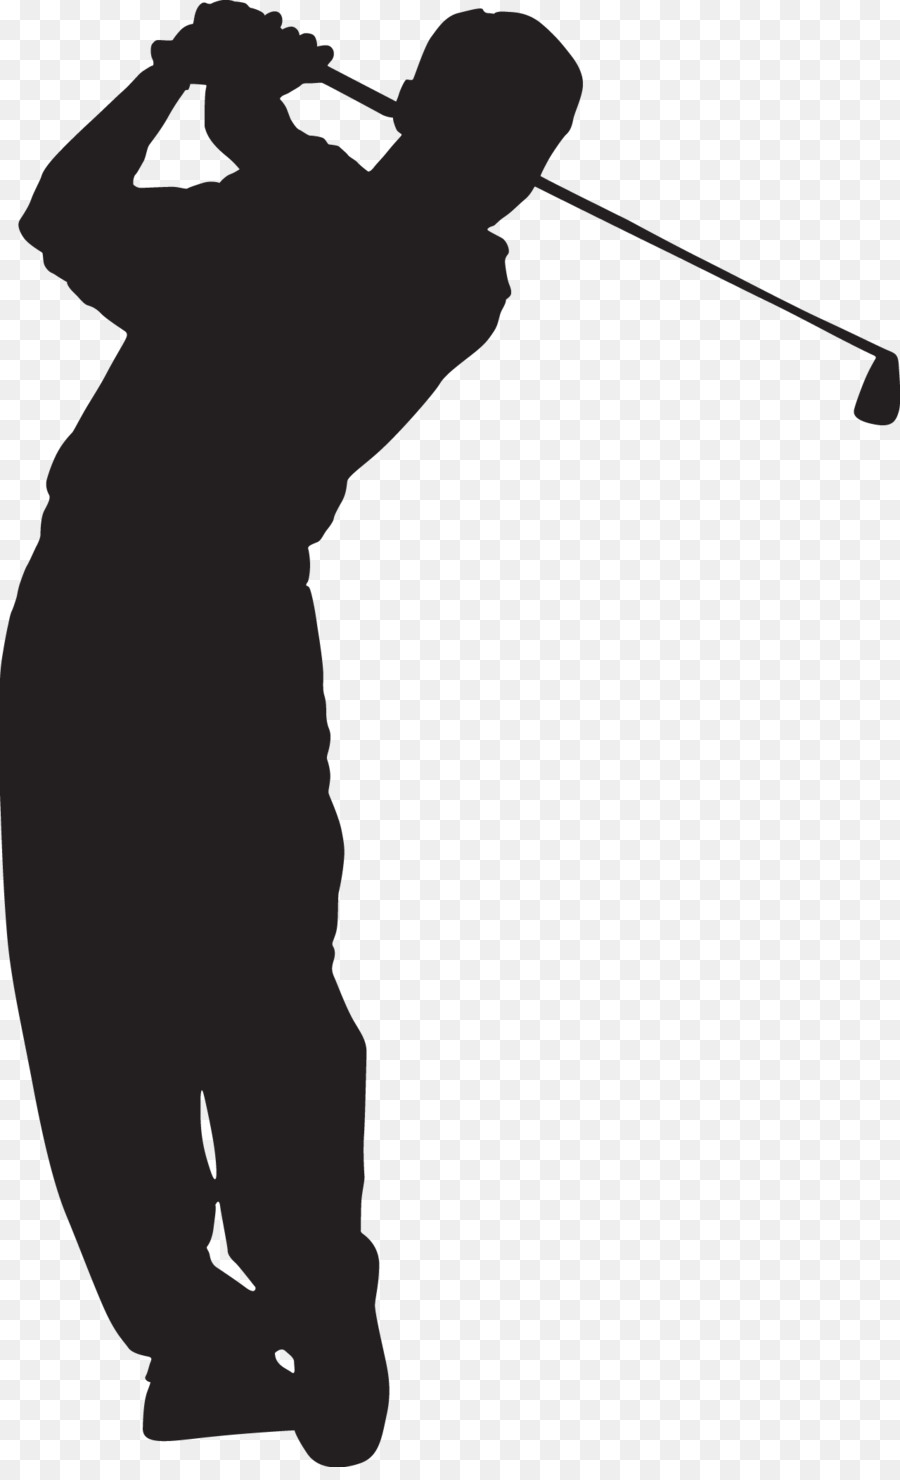 Profi-golfer ゴルファー保険 Golf Bälle - Golf